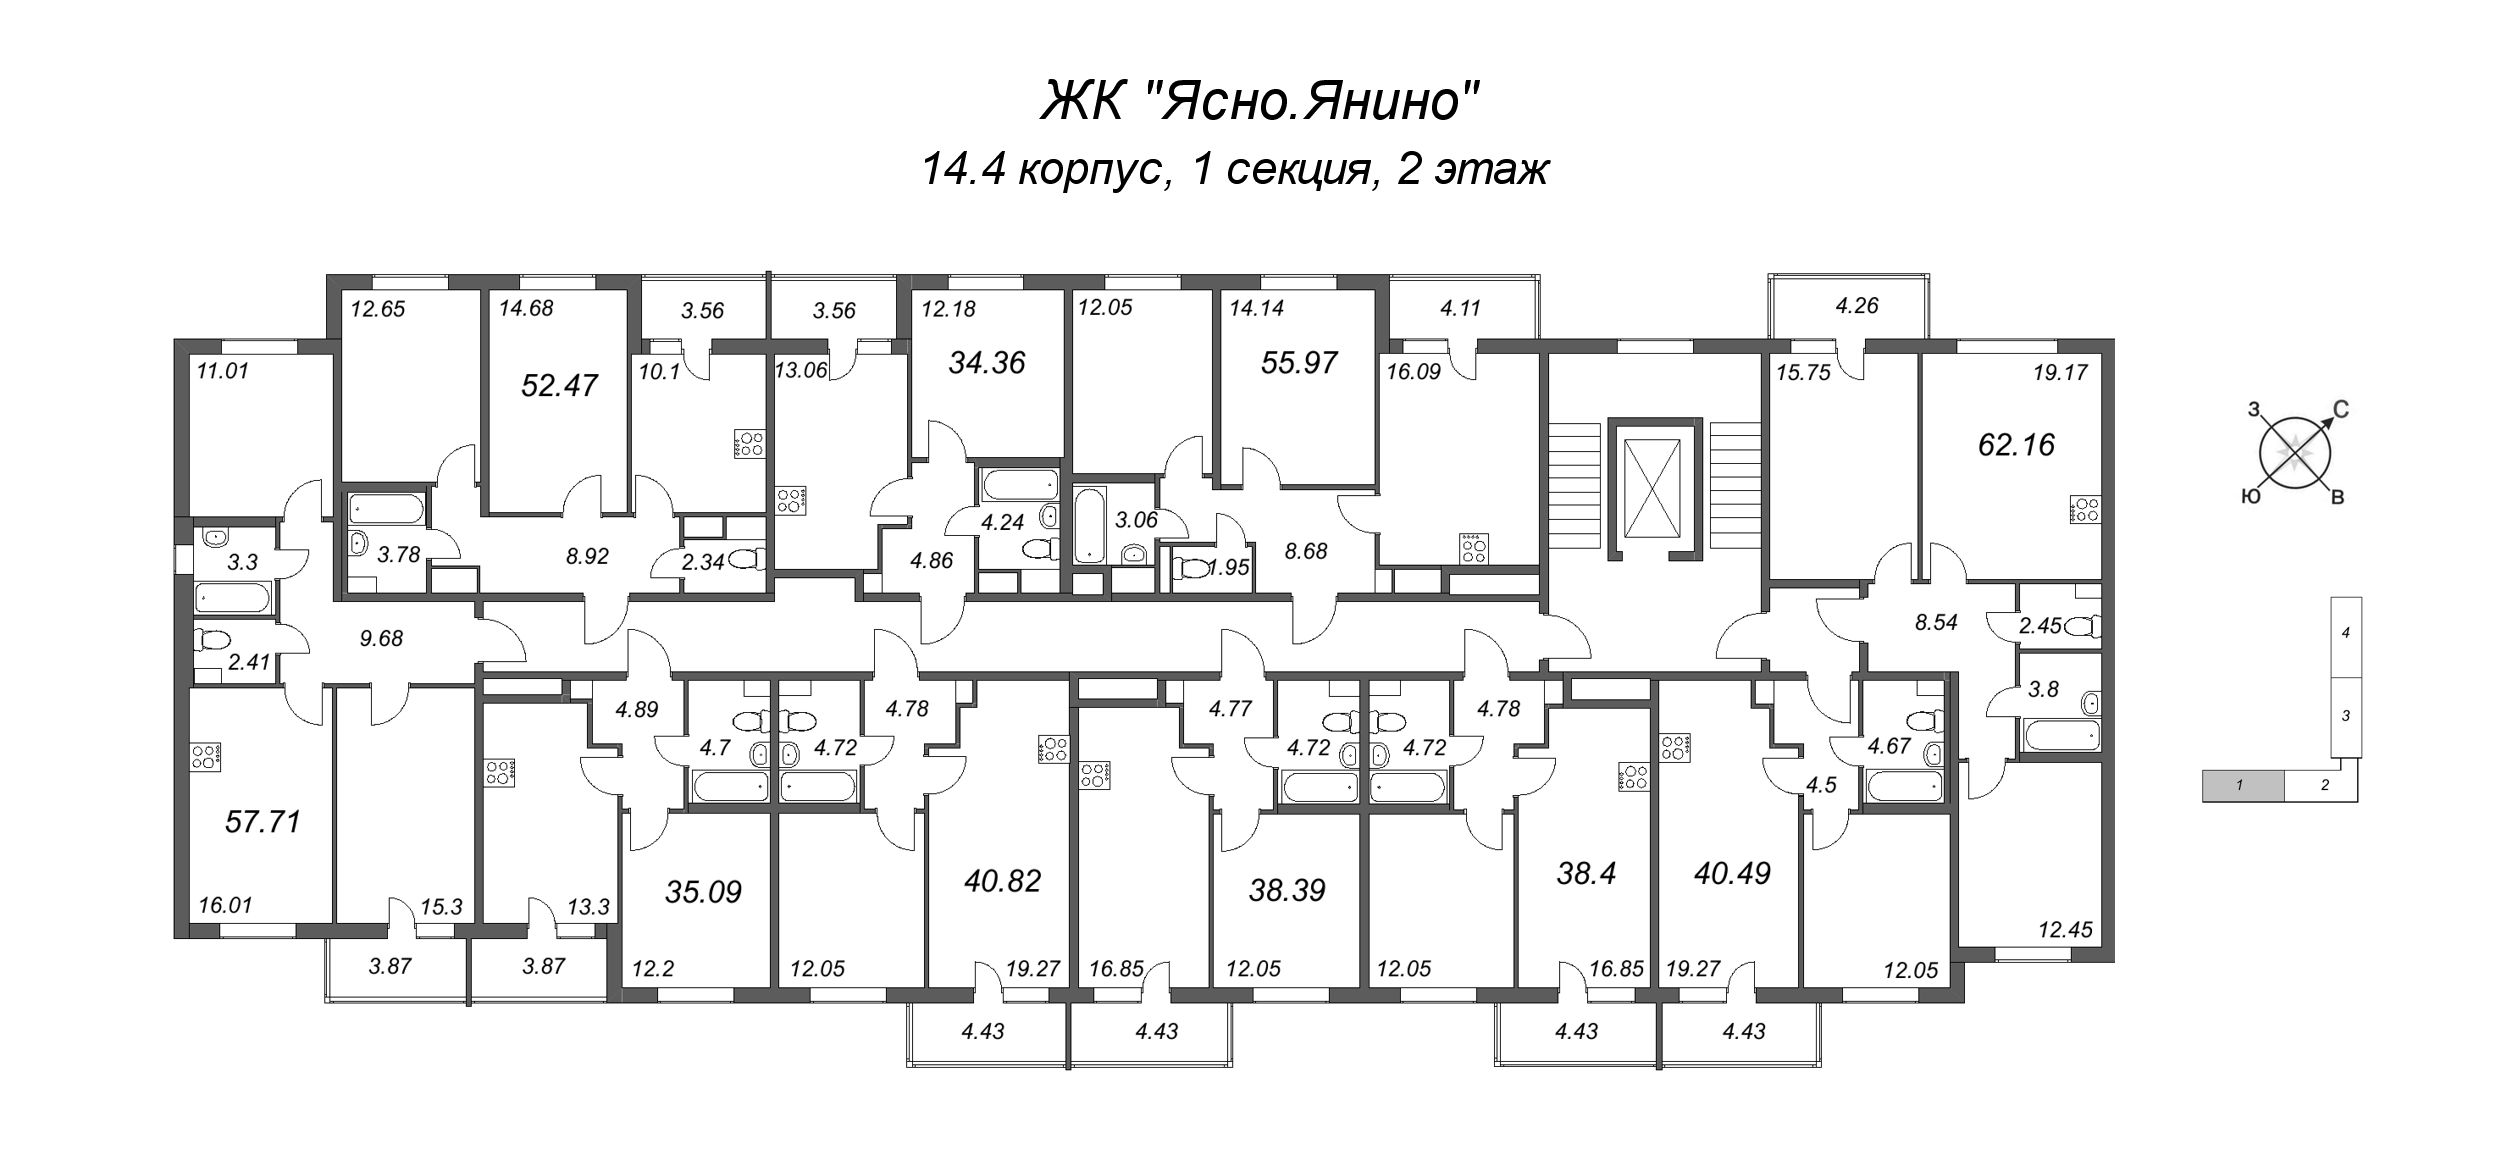 1-комнатная квартира, 35.09 м² в ЖК "Ясно.Янино" - планировка этажа